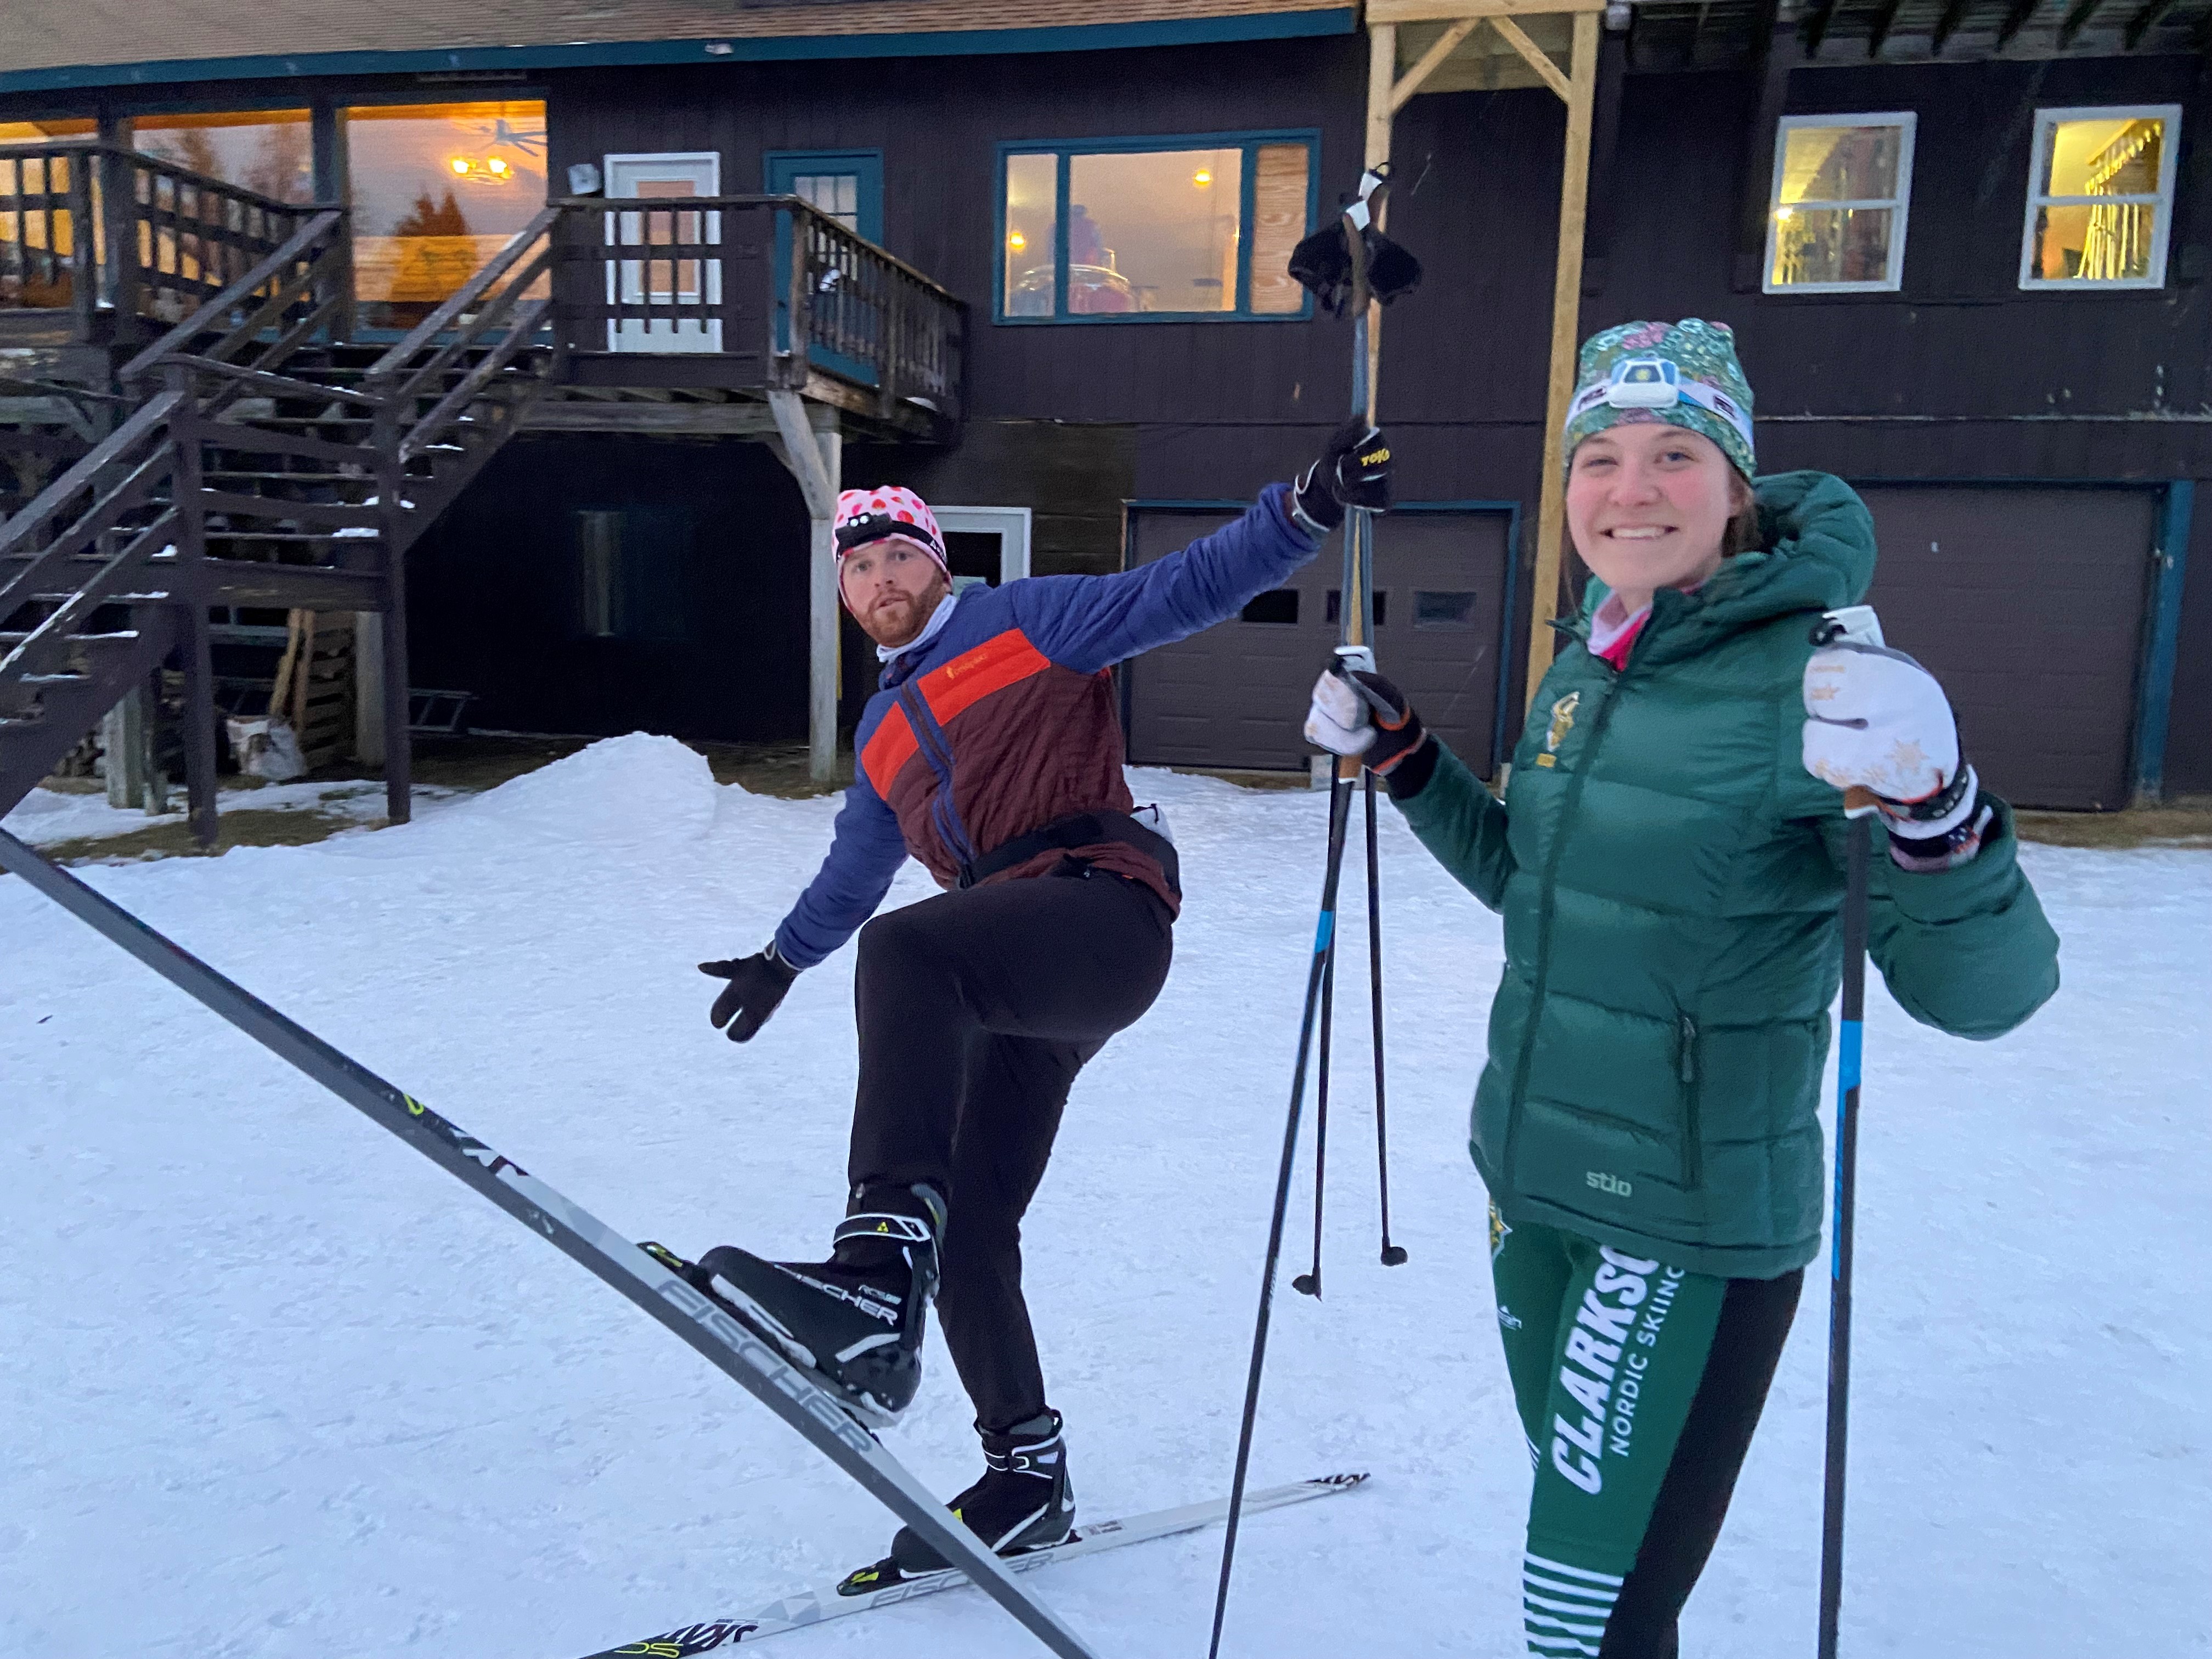 Next Gen members at a ski night in Lake Placid